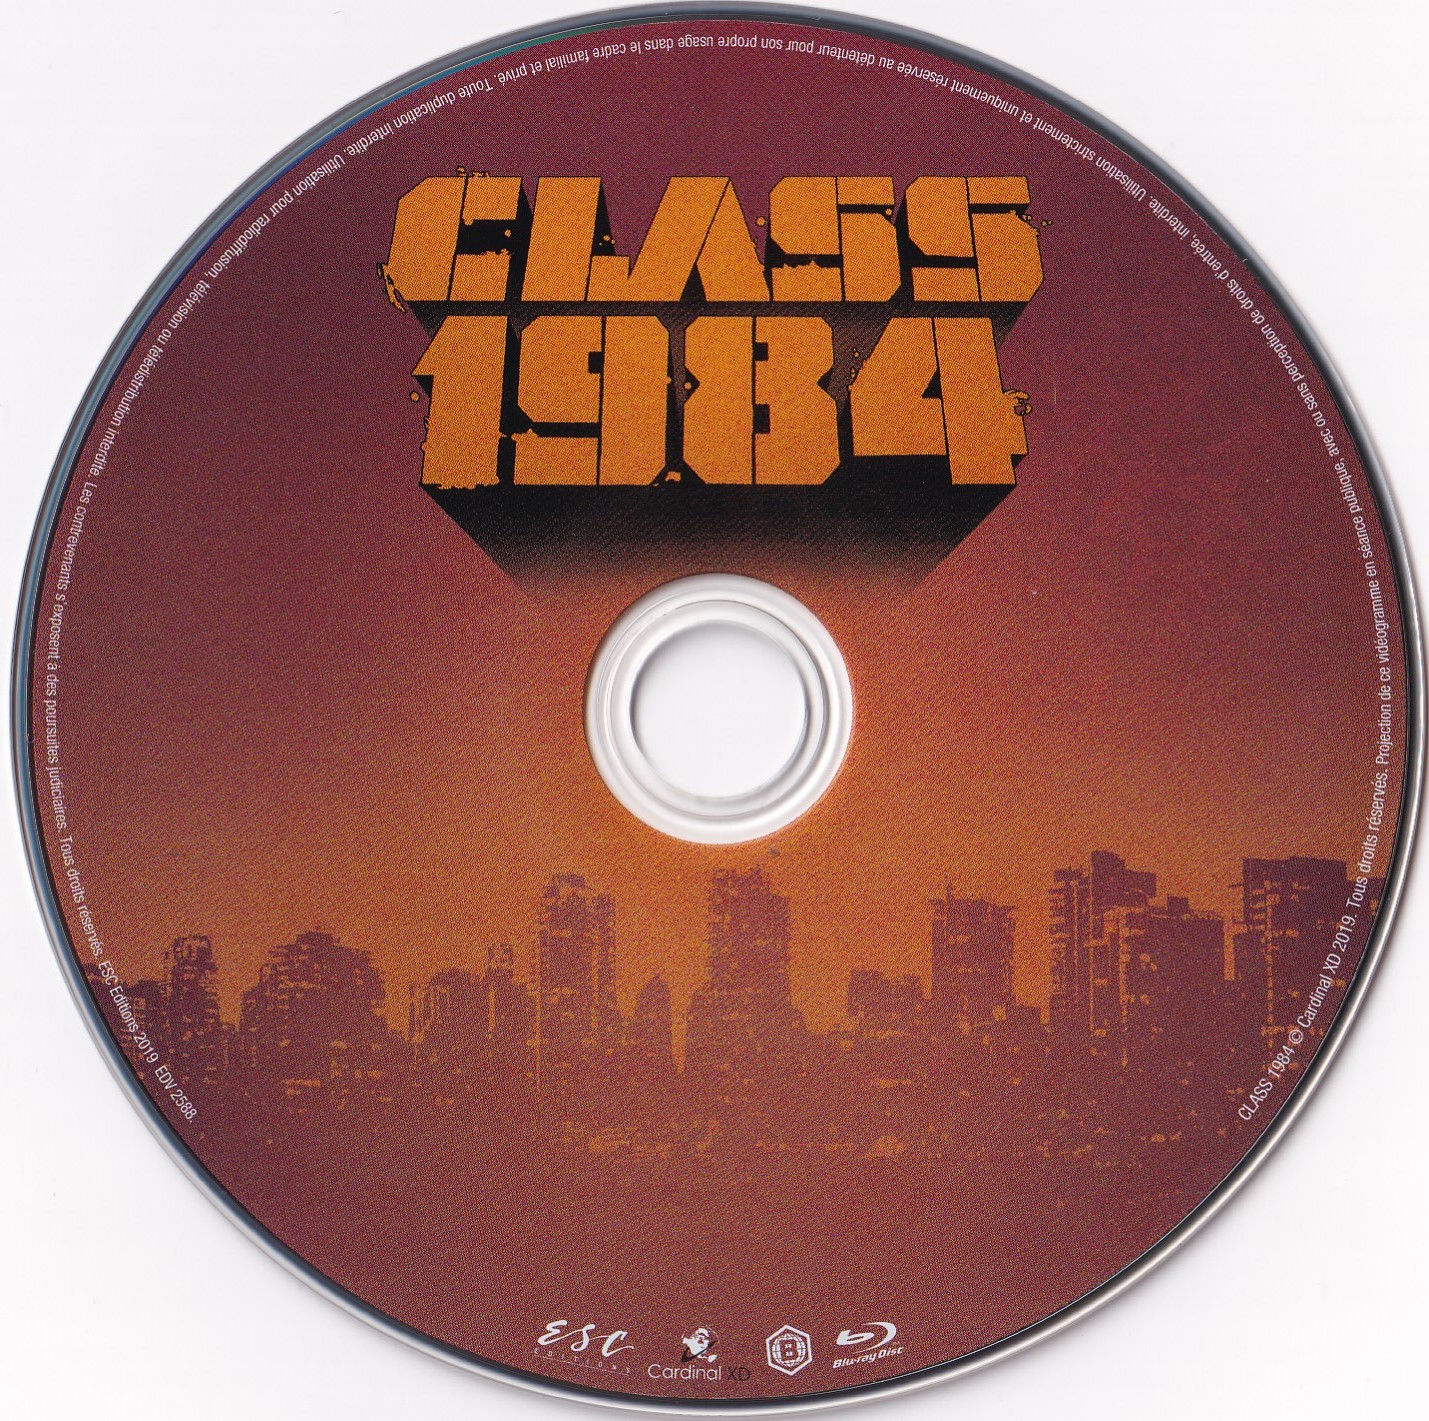 Class 1984 (BLU-RAY)